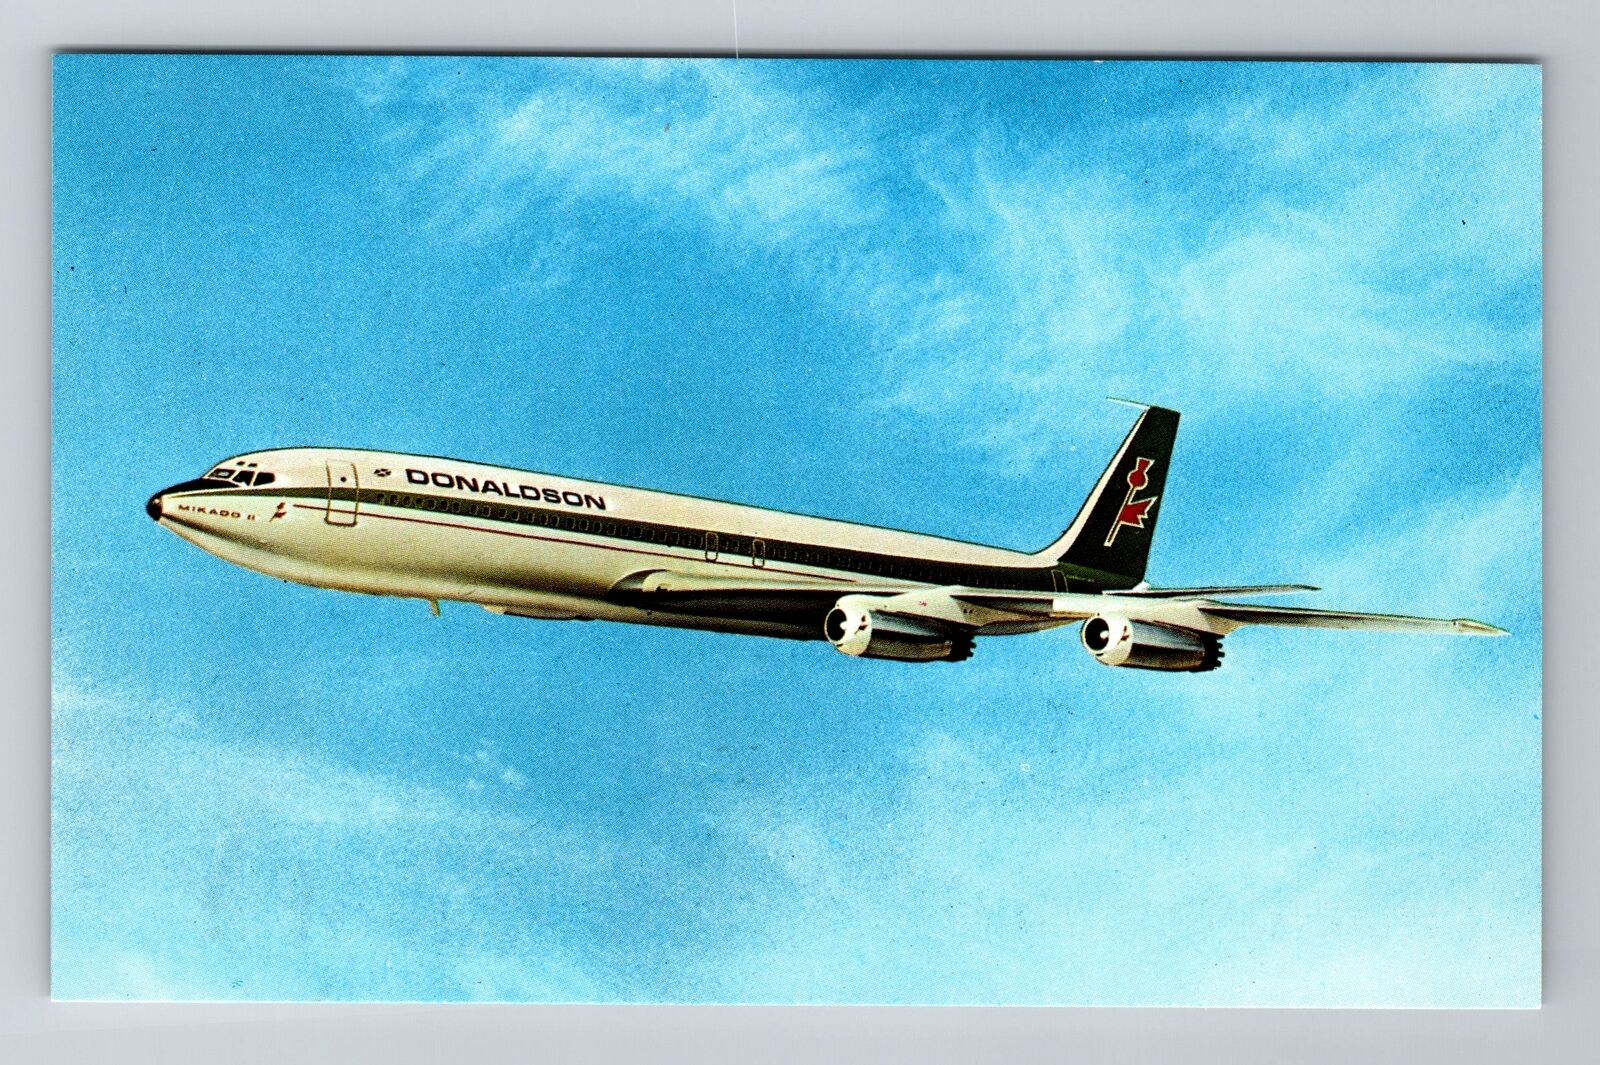 Donaldson Intl Air Boeing 707, Plane, Transportation Antique Vintage Postcard